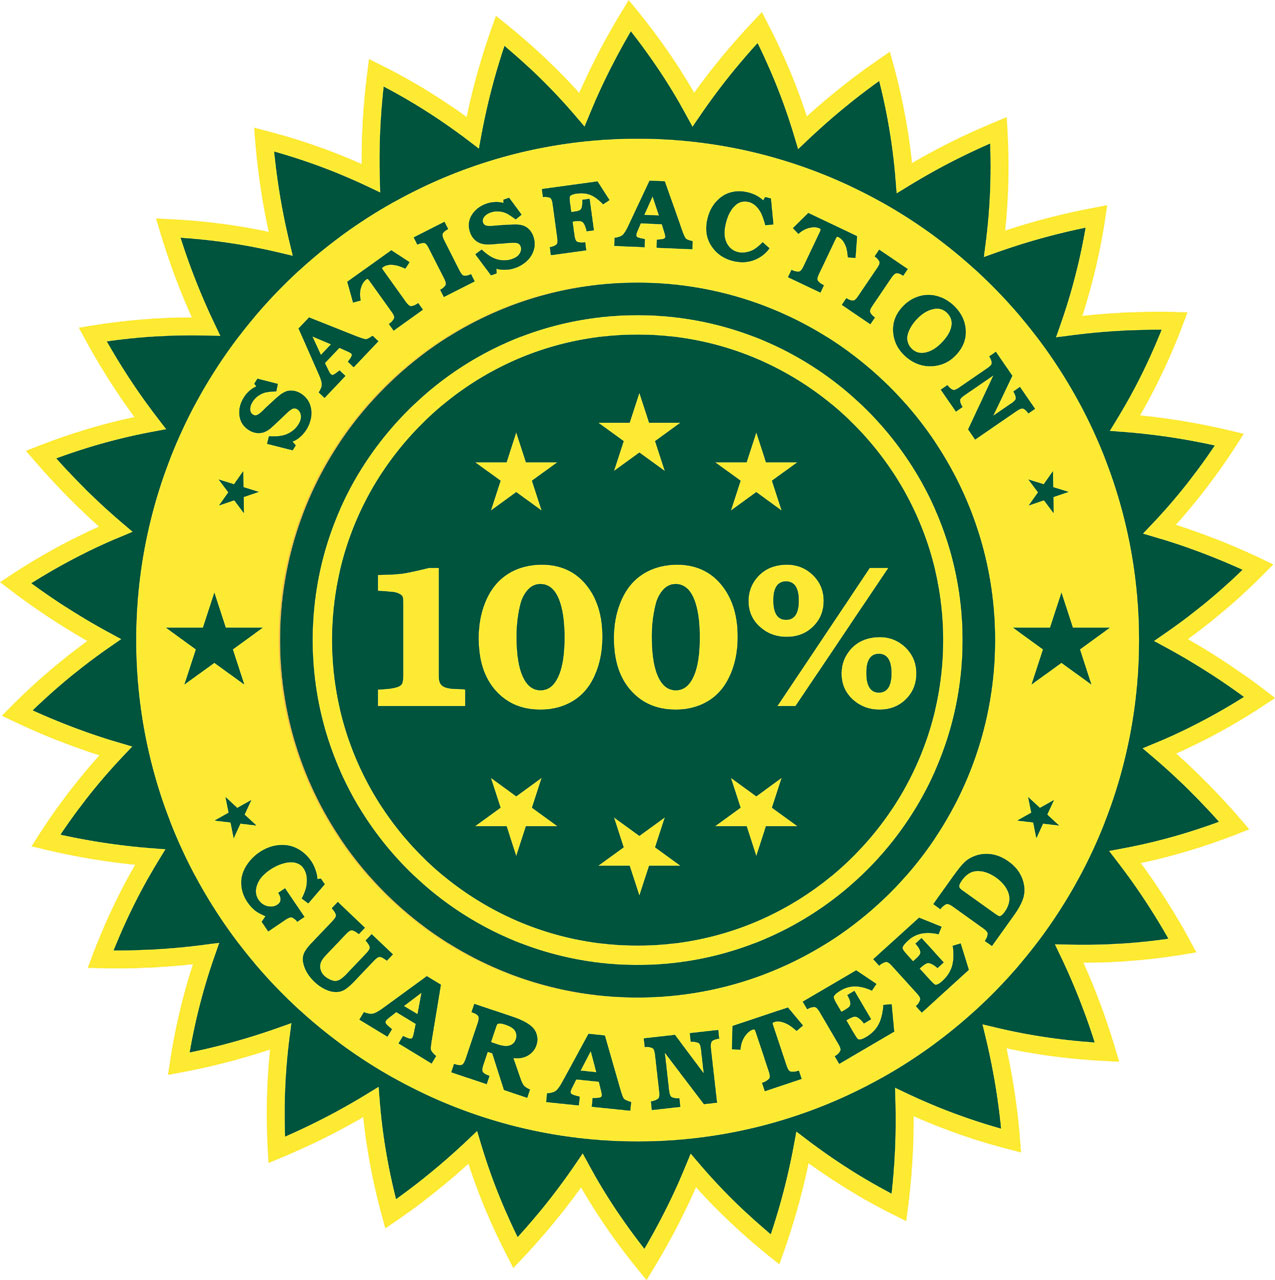 arttree 100% satisfaction Guaranteed